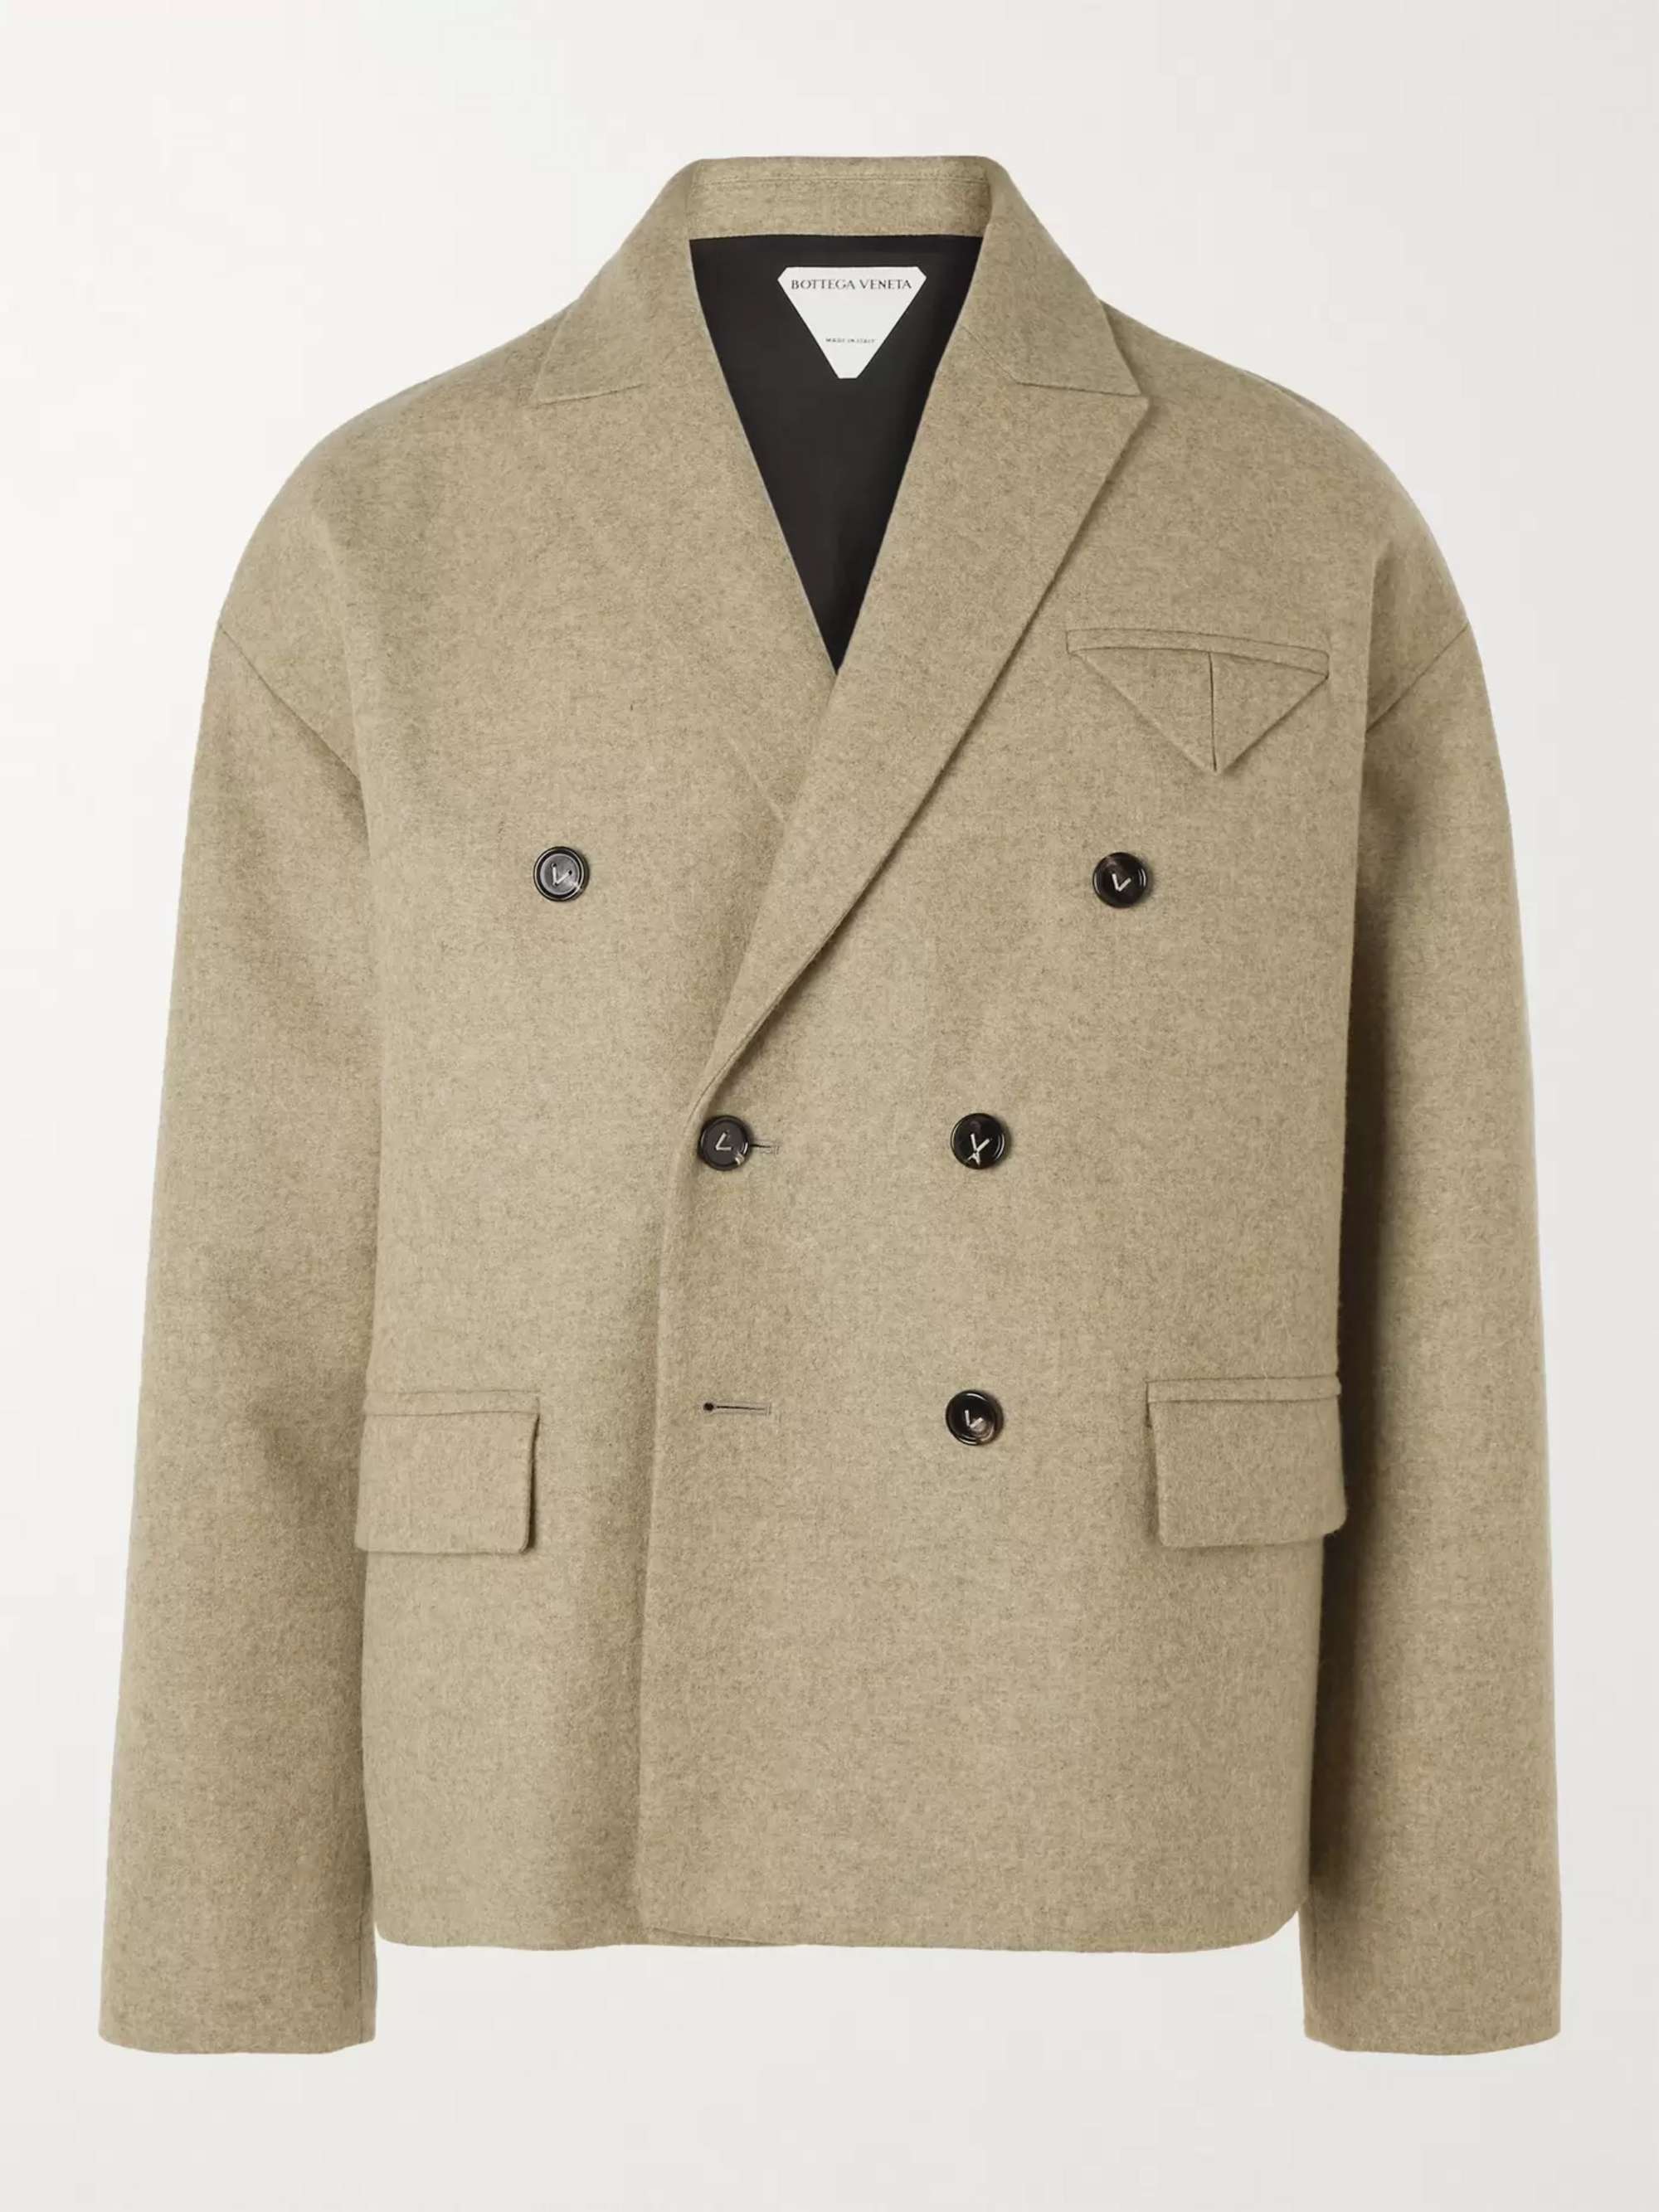 BOTTEGA VENETA Double-Breasted Wool-Blend Suit Jacket